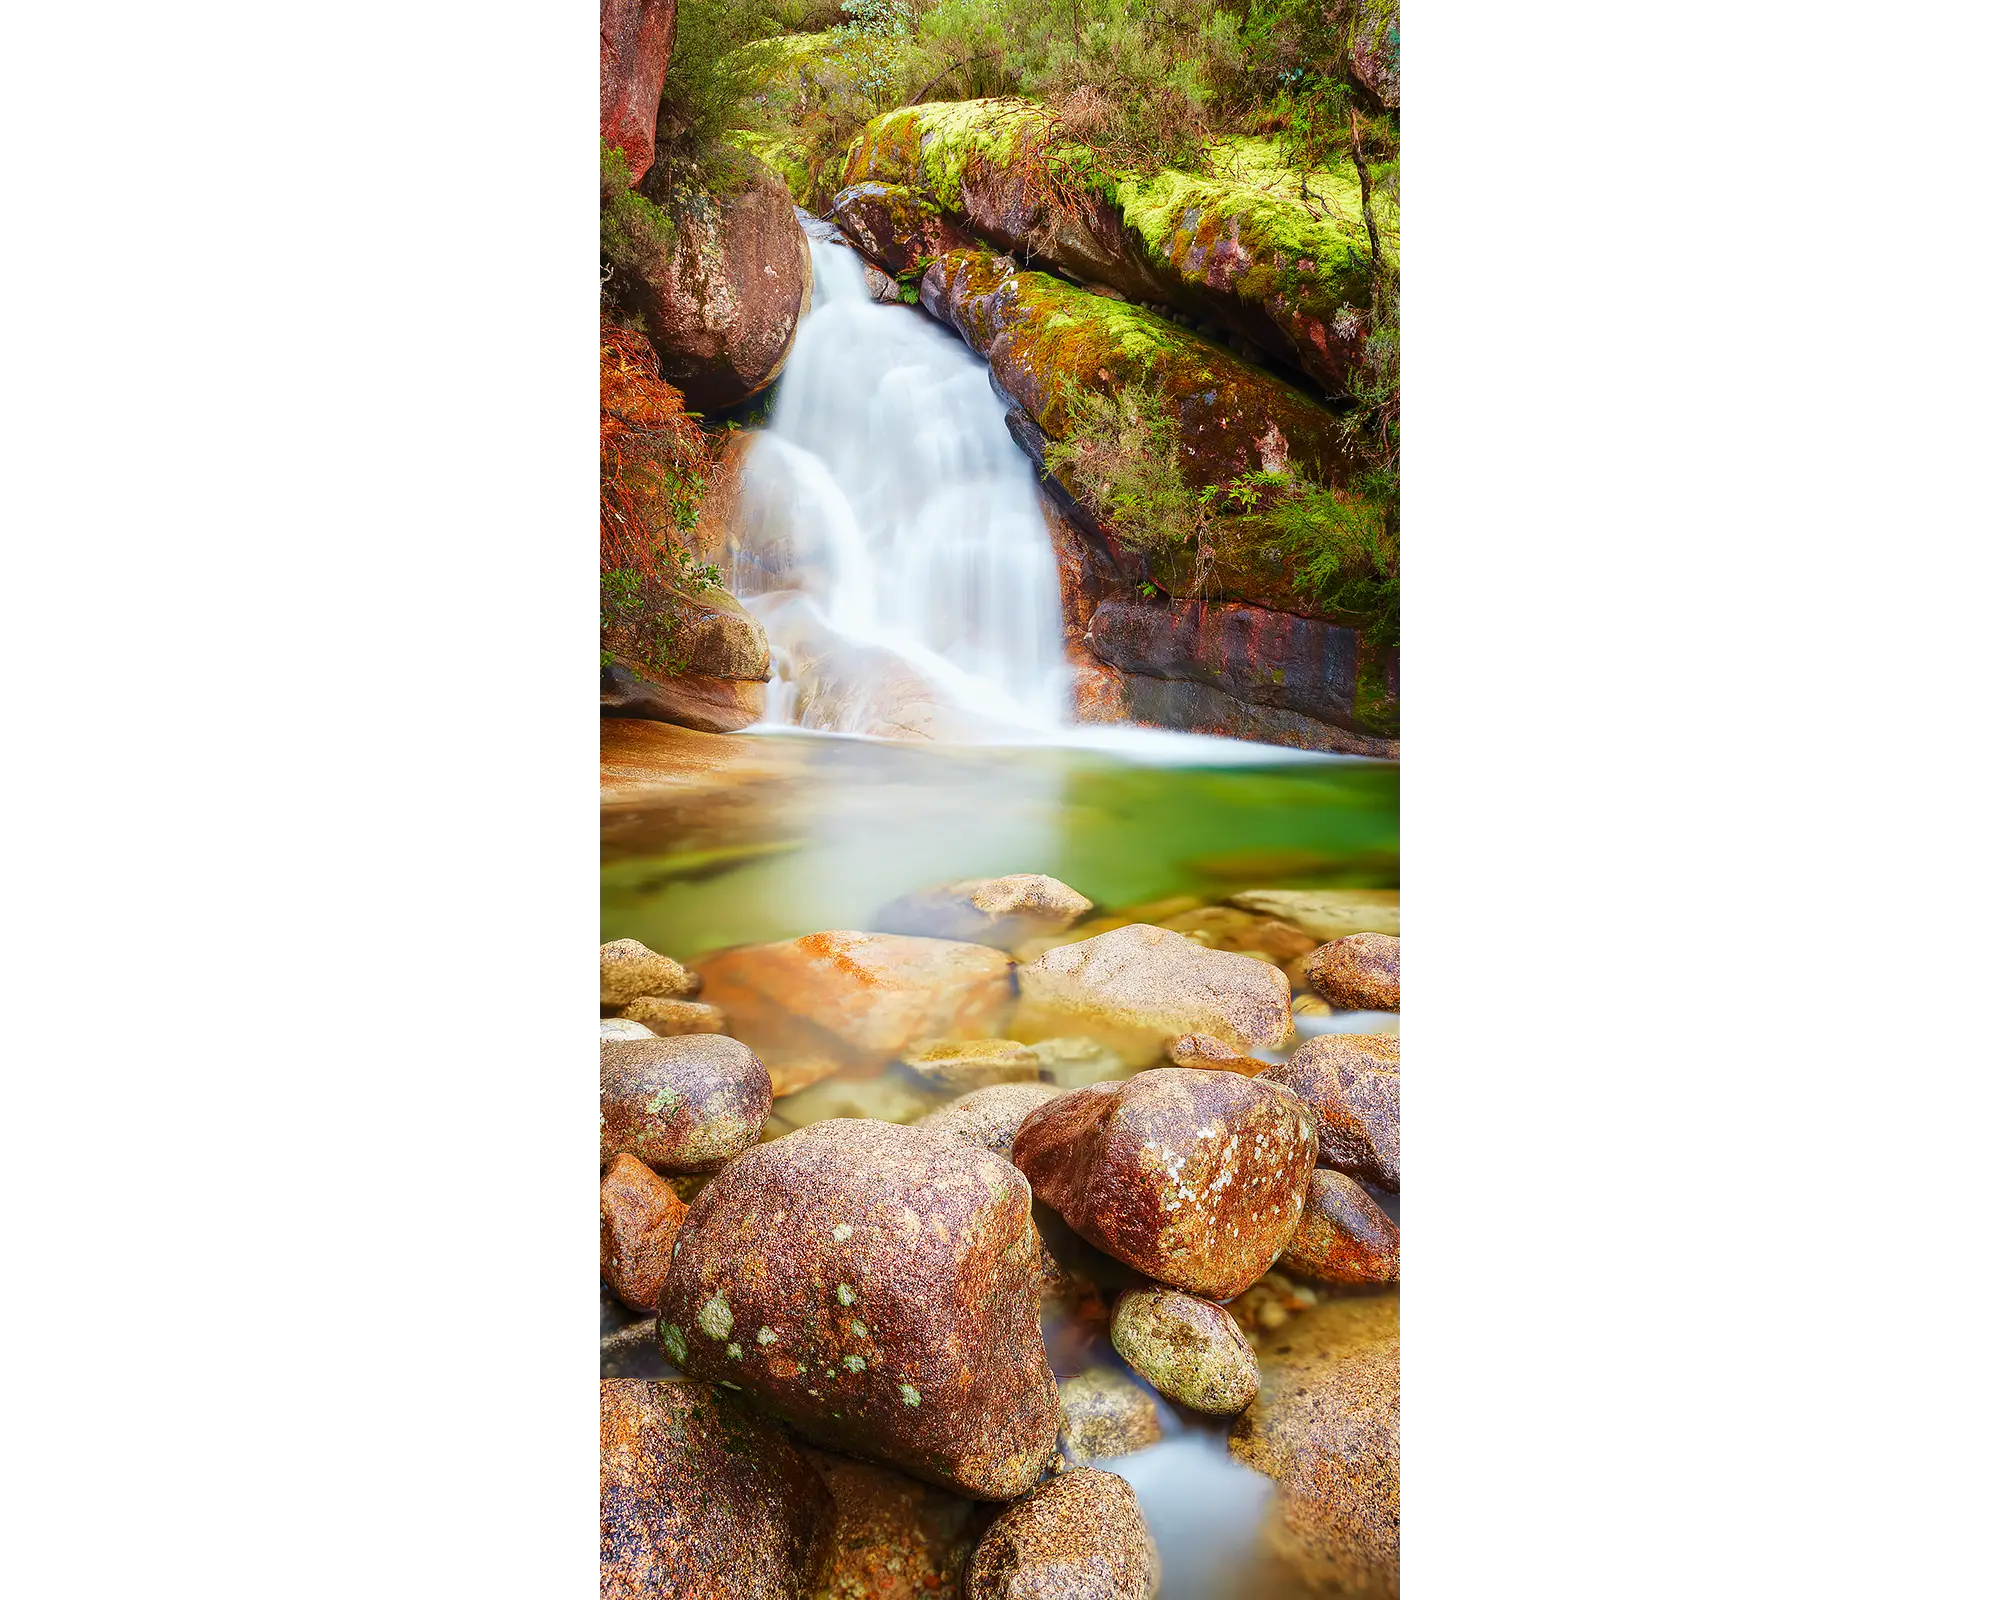 Ladies Bath Falls, Mount Buffalo, Victoria, Australia.